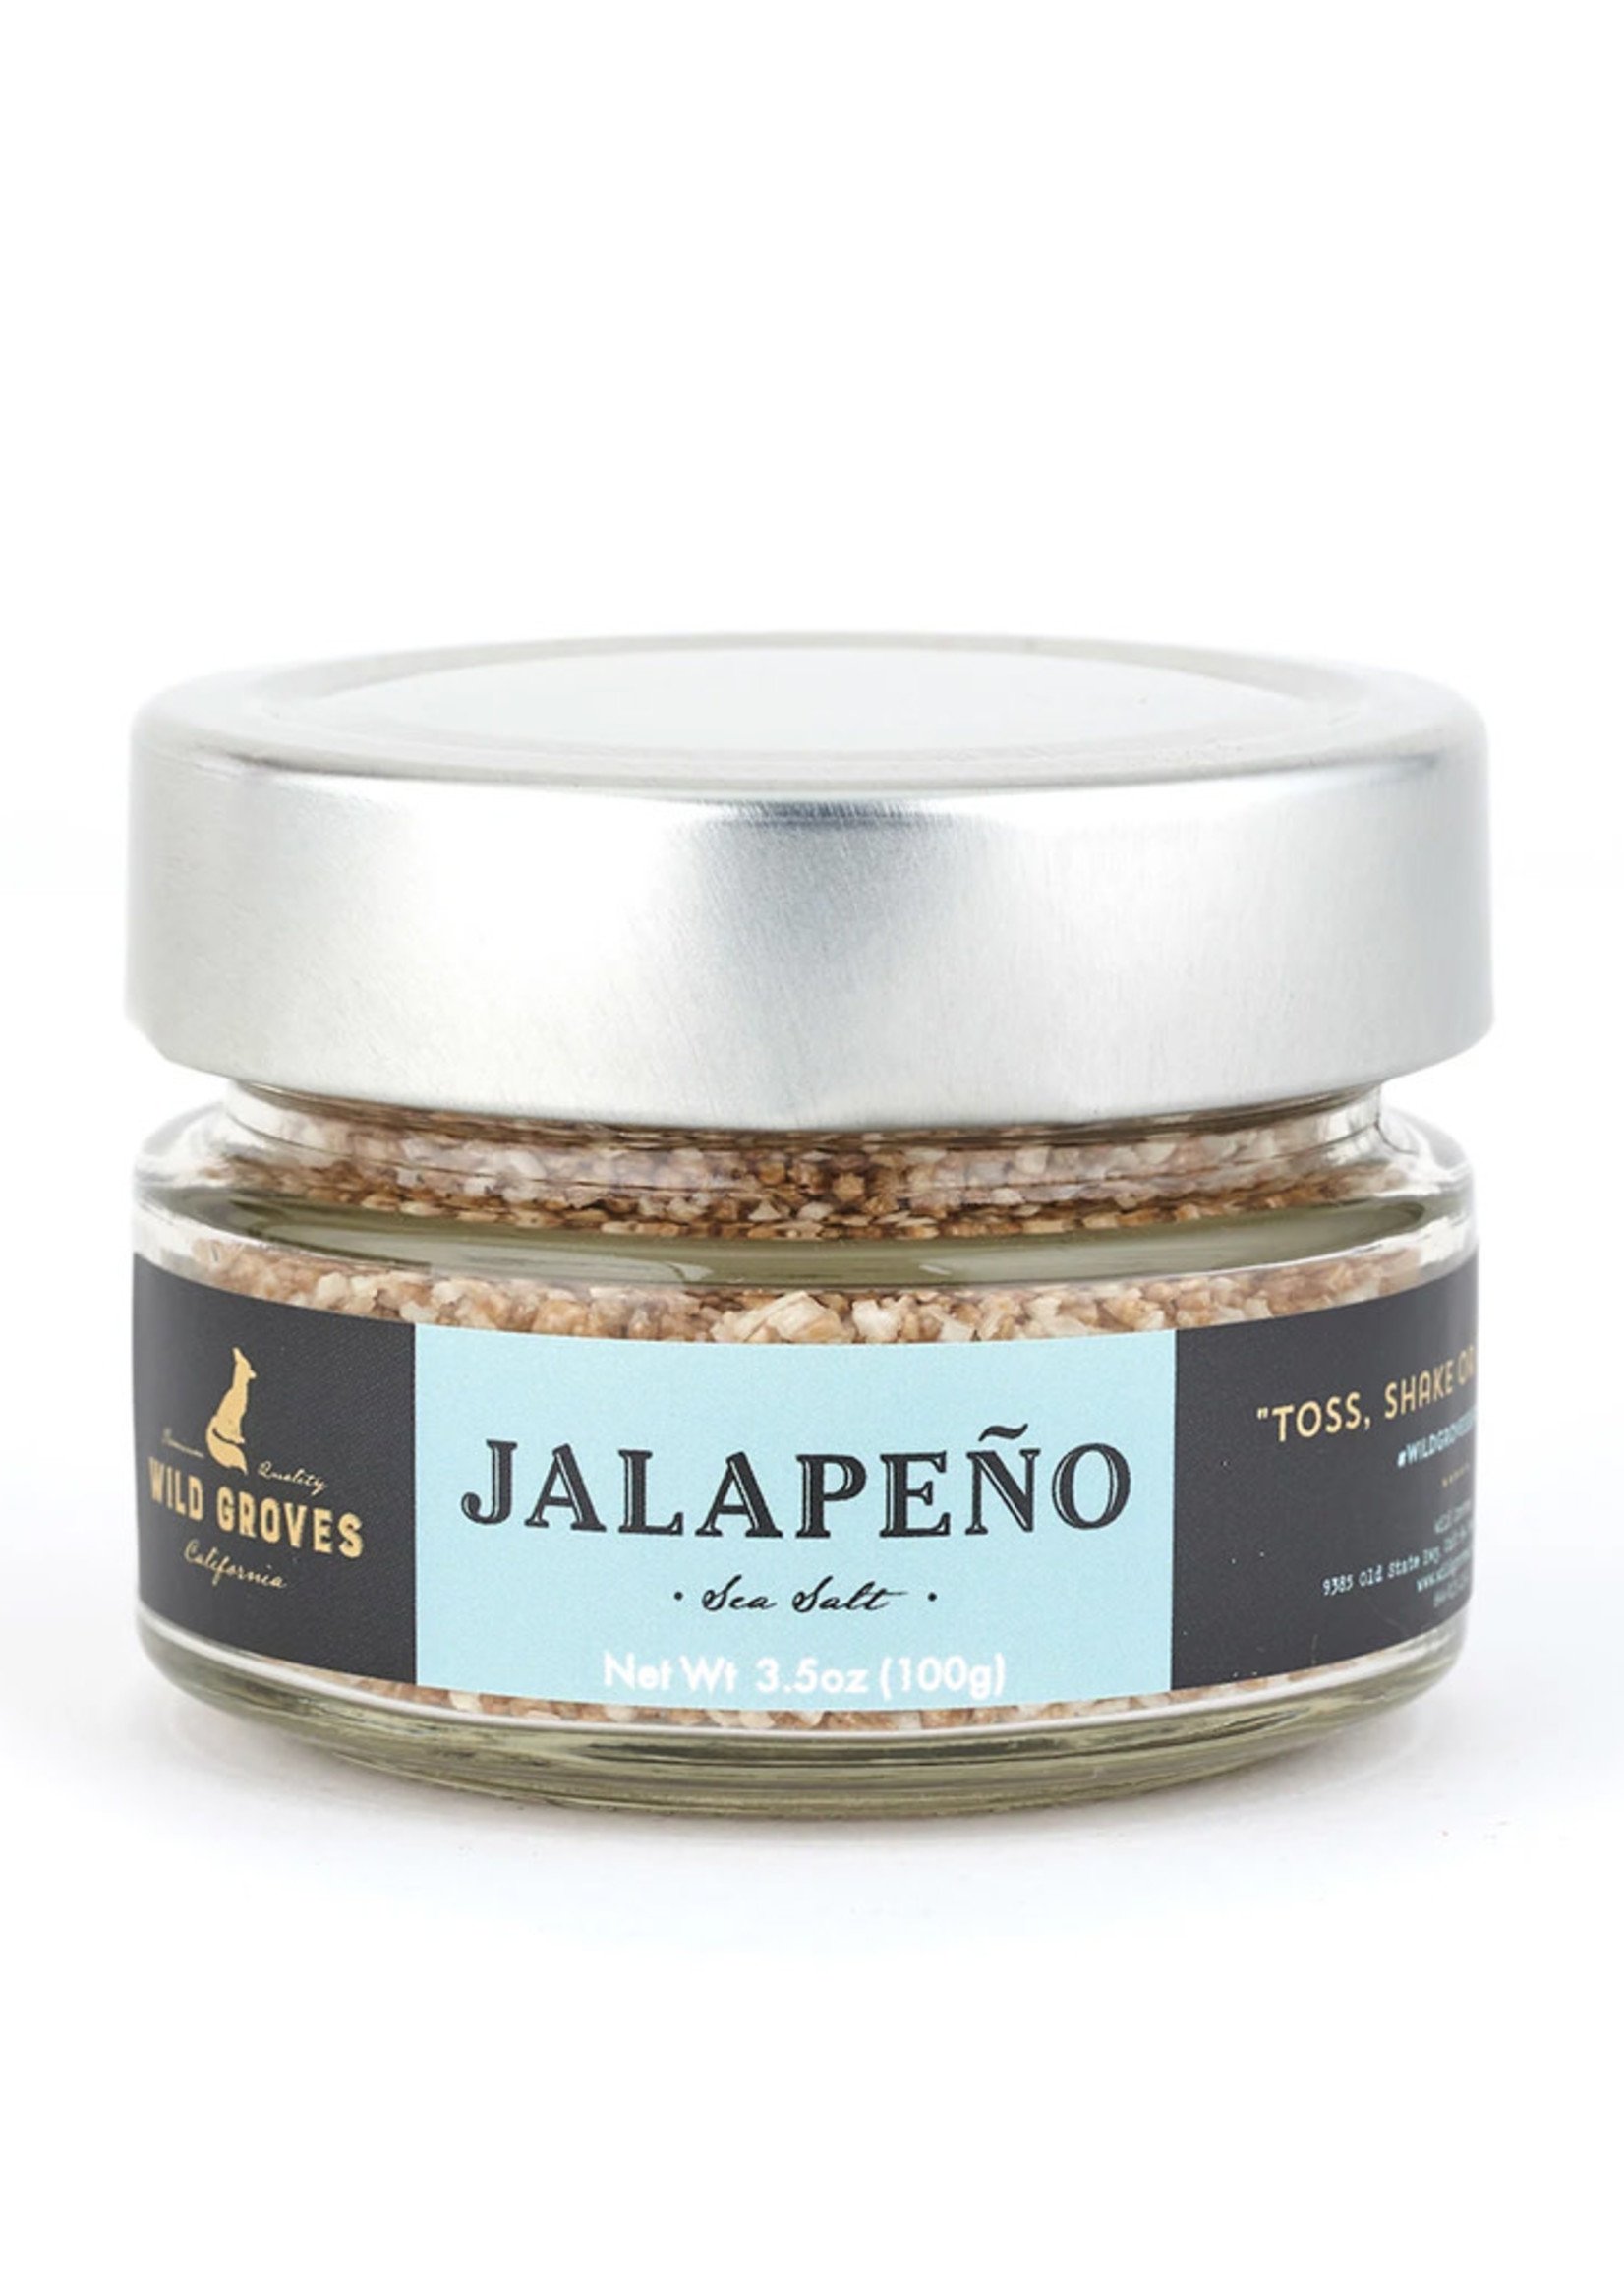 Wild Groves Jalapeno Sea Salt | Wild Groves Brand | 3.5 oz